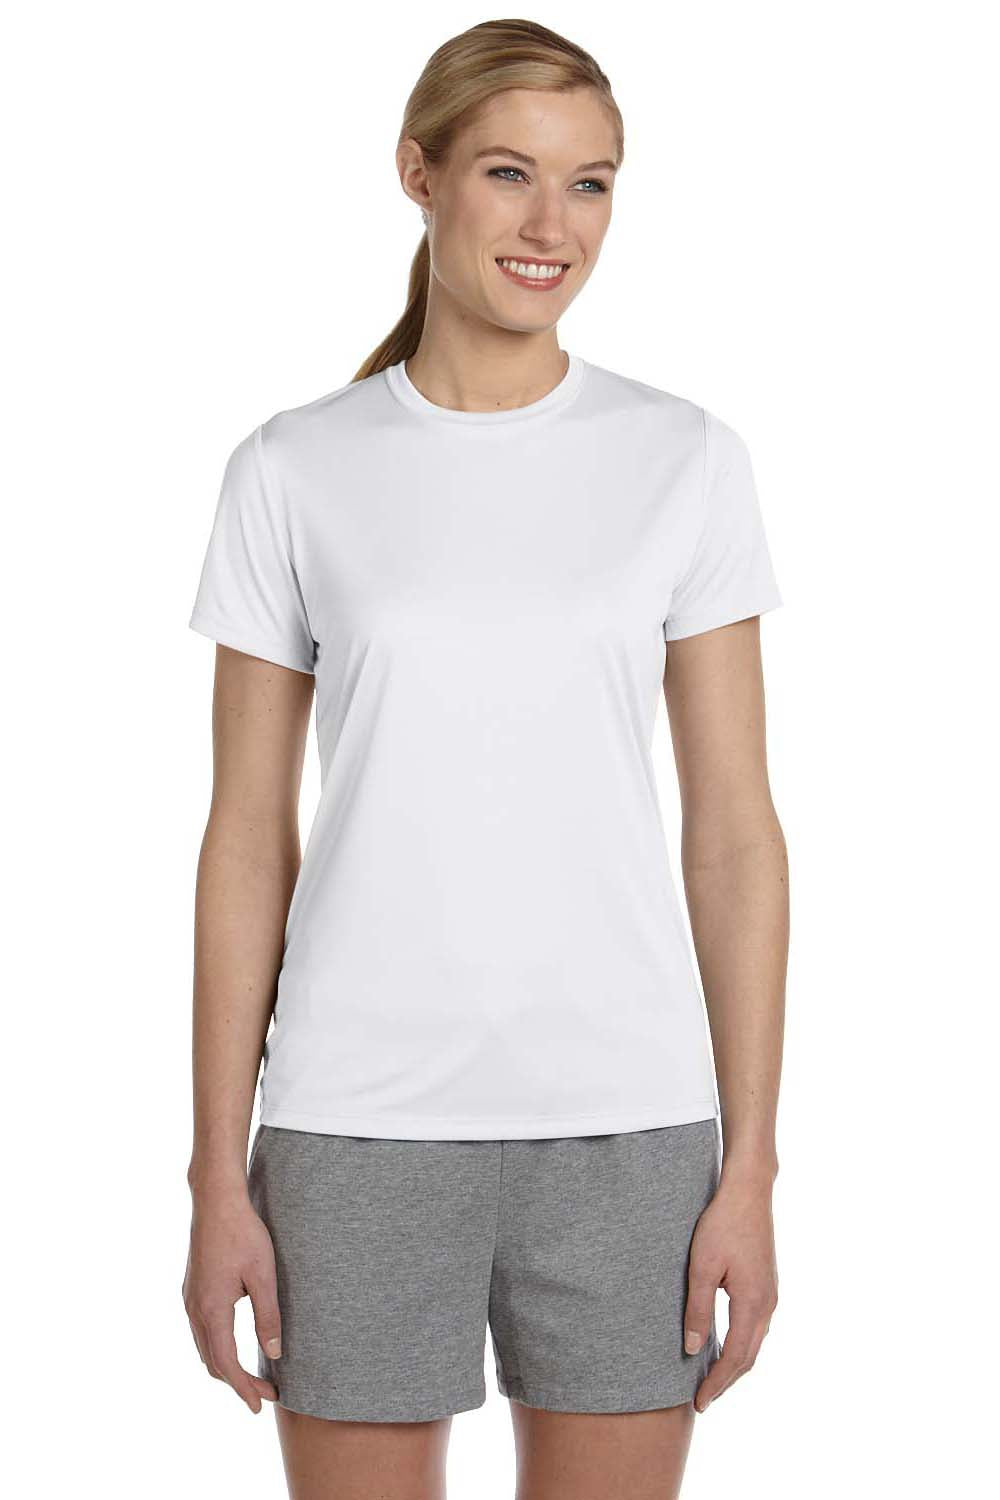 Hanes 4830 Womens Cool DRI FreshIQ Moisture Wicking Short Sleeve Crewneck T-Shirt White Front